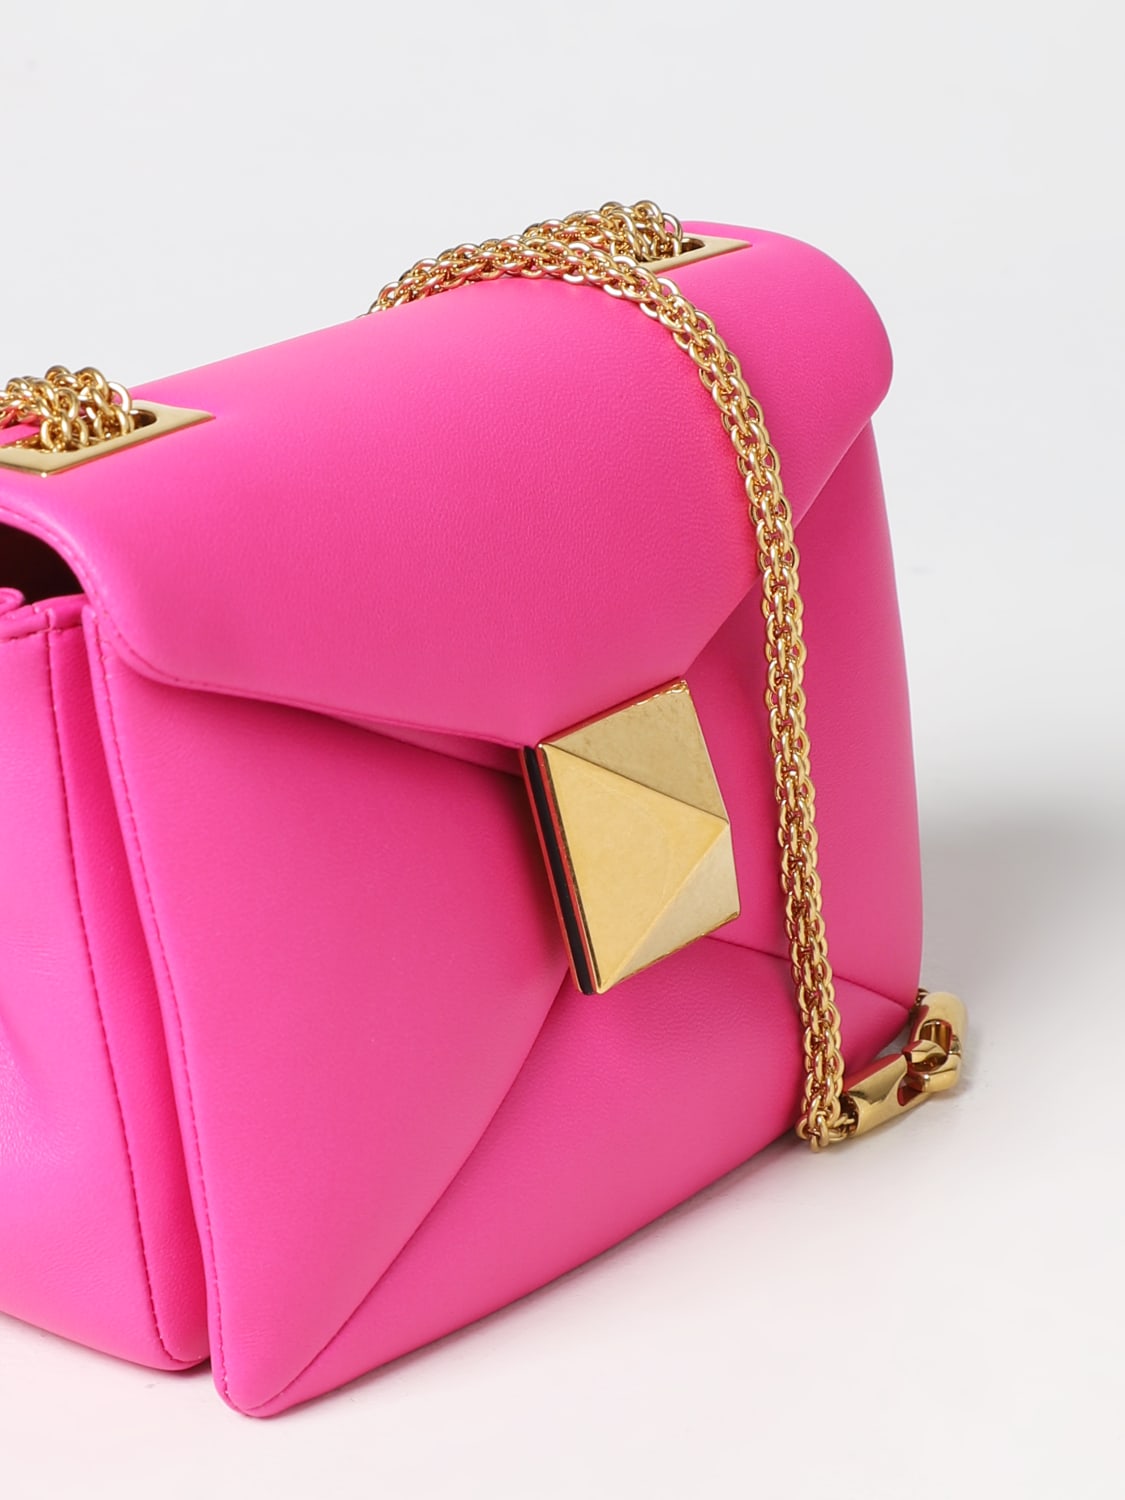 VALENTINO GARAVANI: Letter Bag in leather - Pink